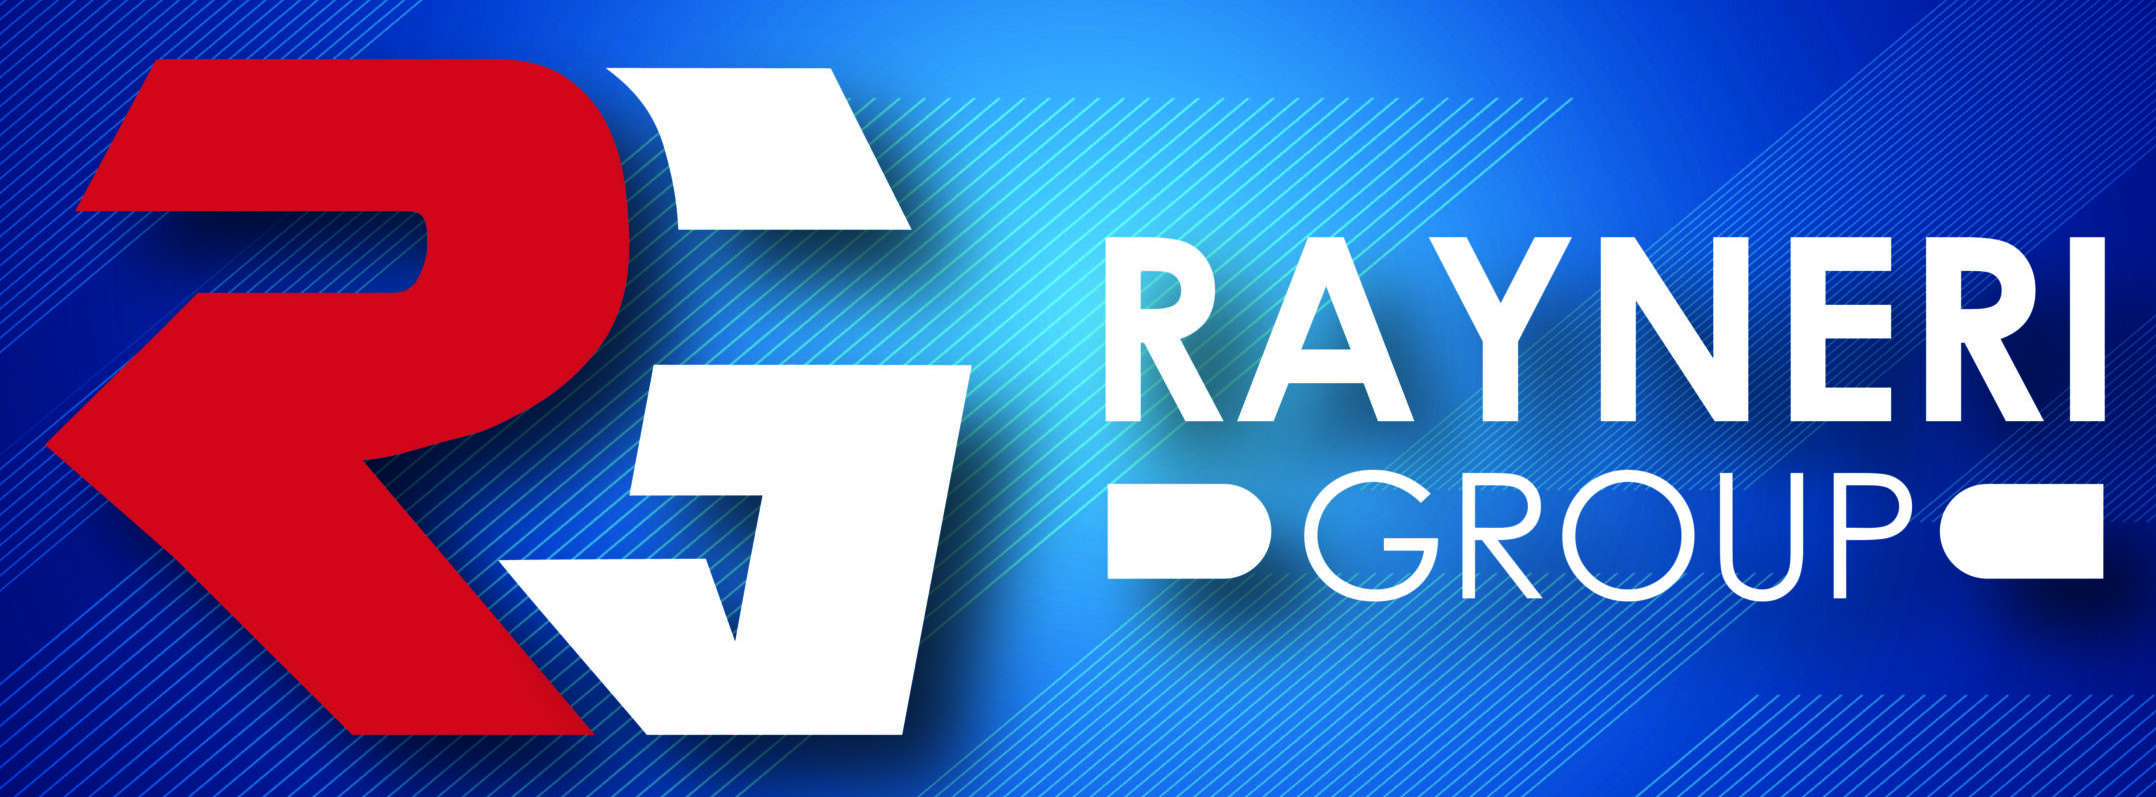 Rayneri Group